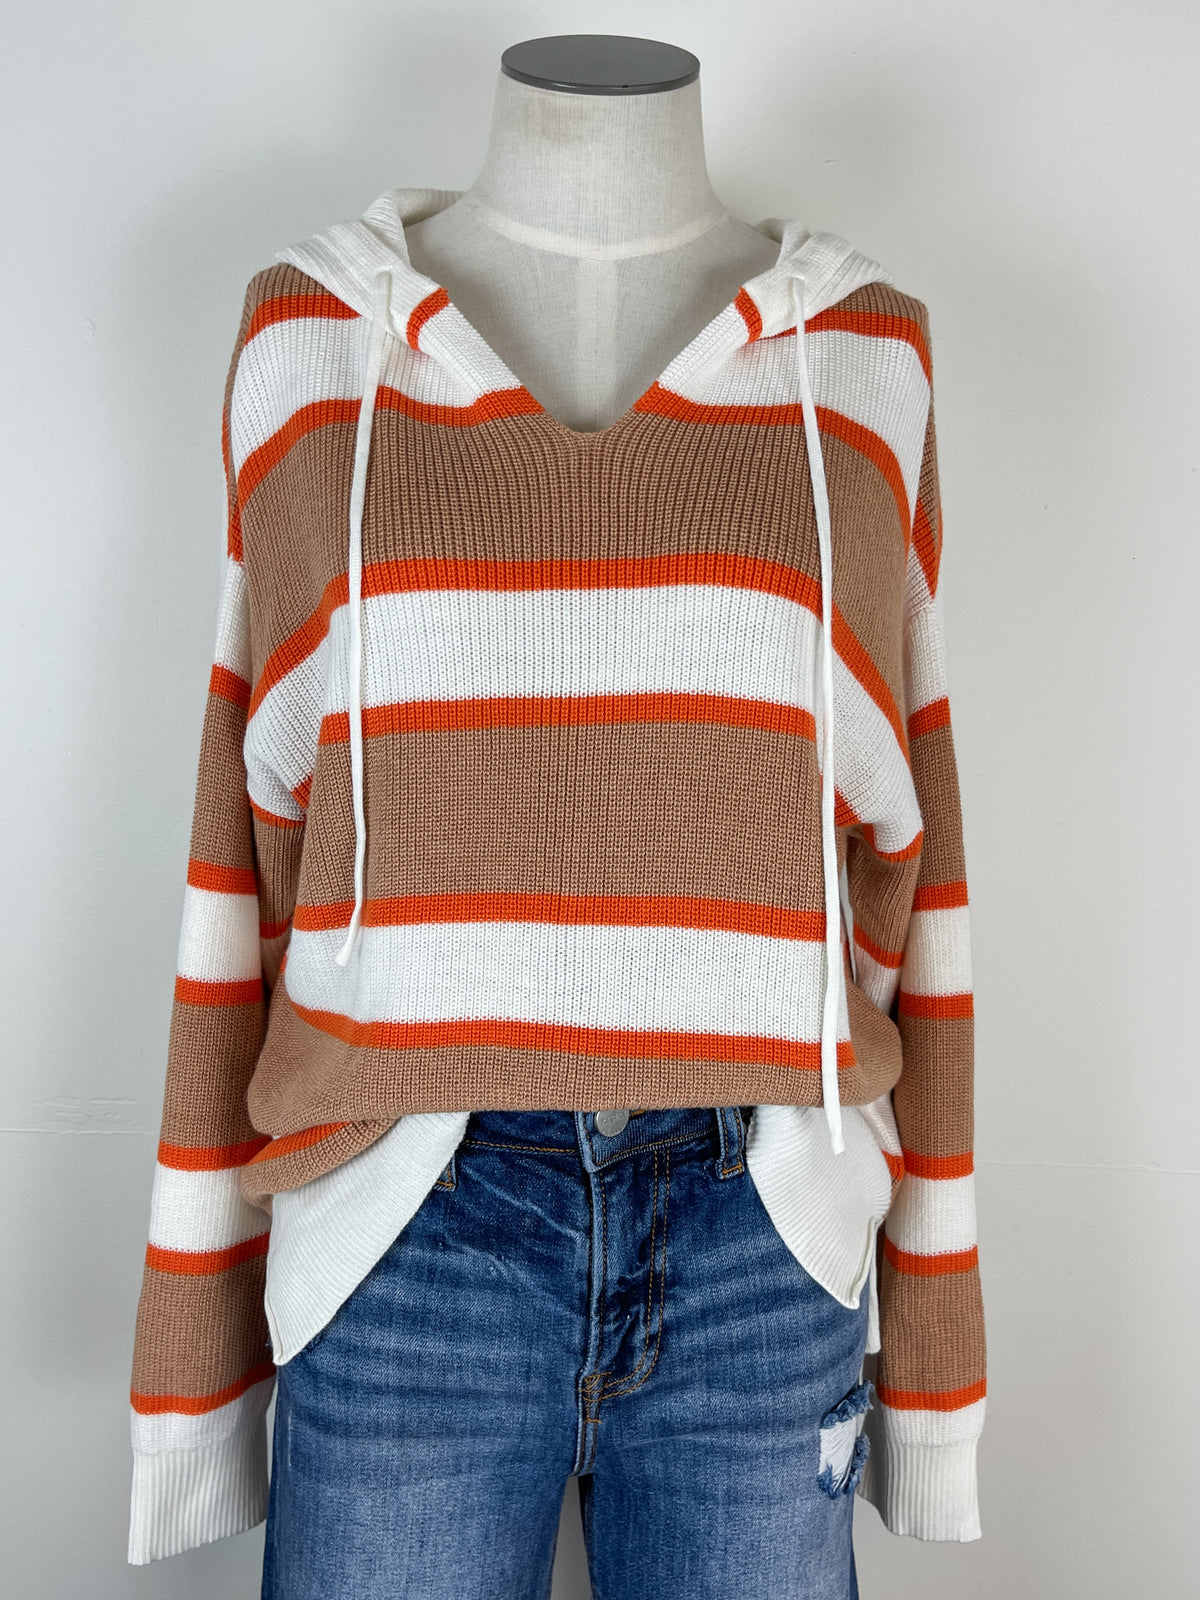 Kit Striped Hooded Sweater in Tan/Orange